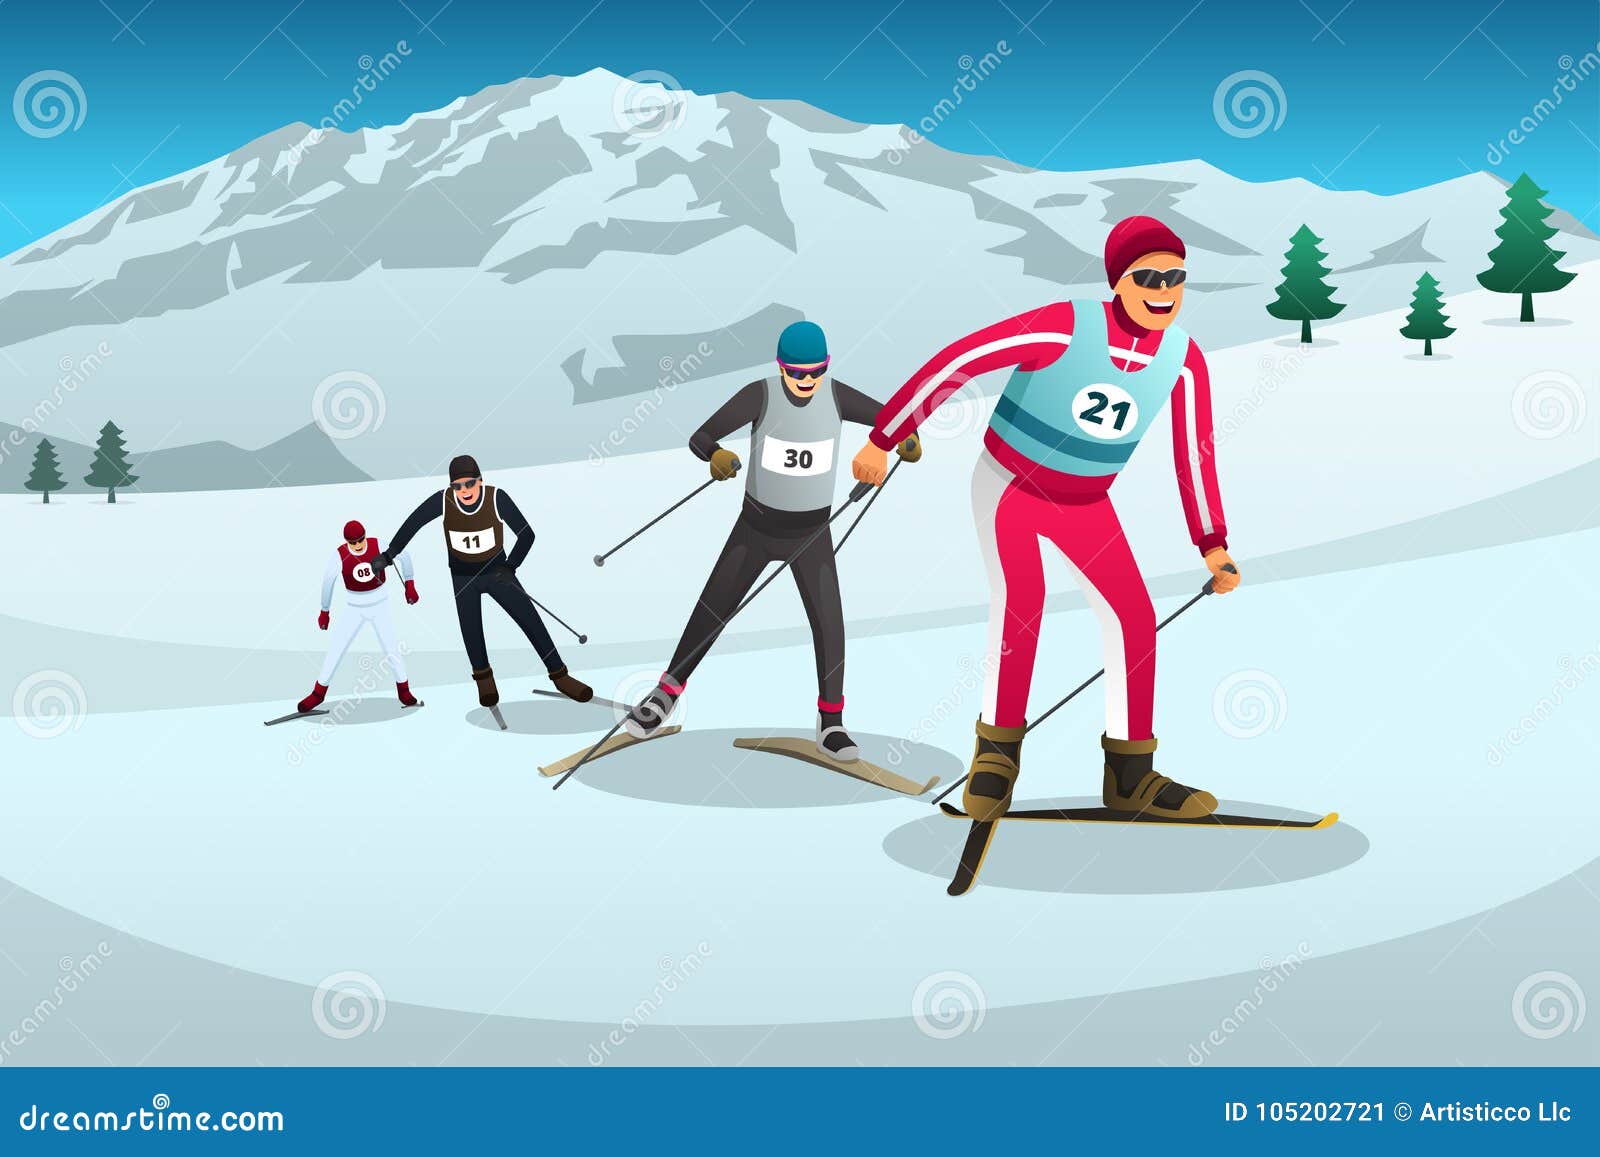 Crossed Skis Cartoon